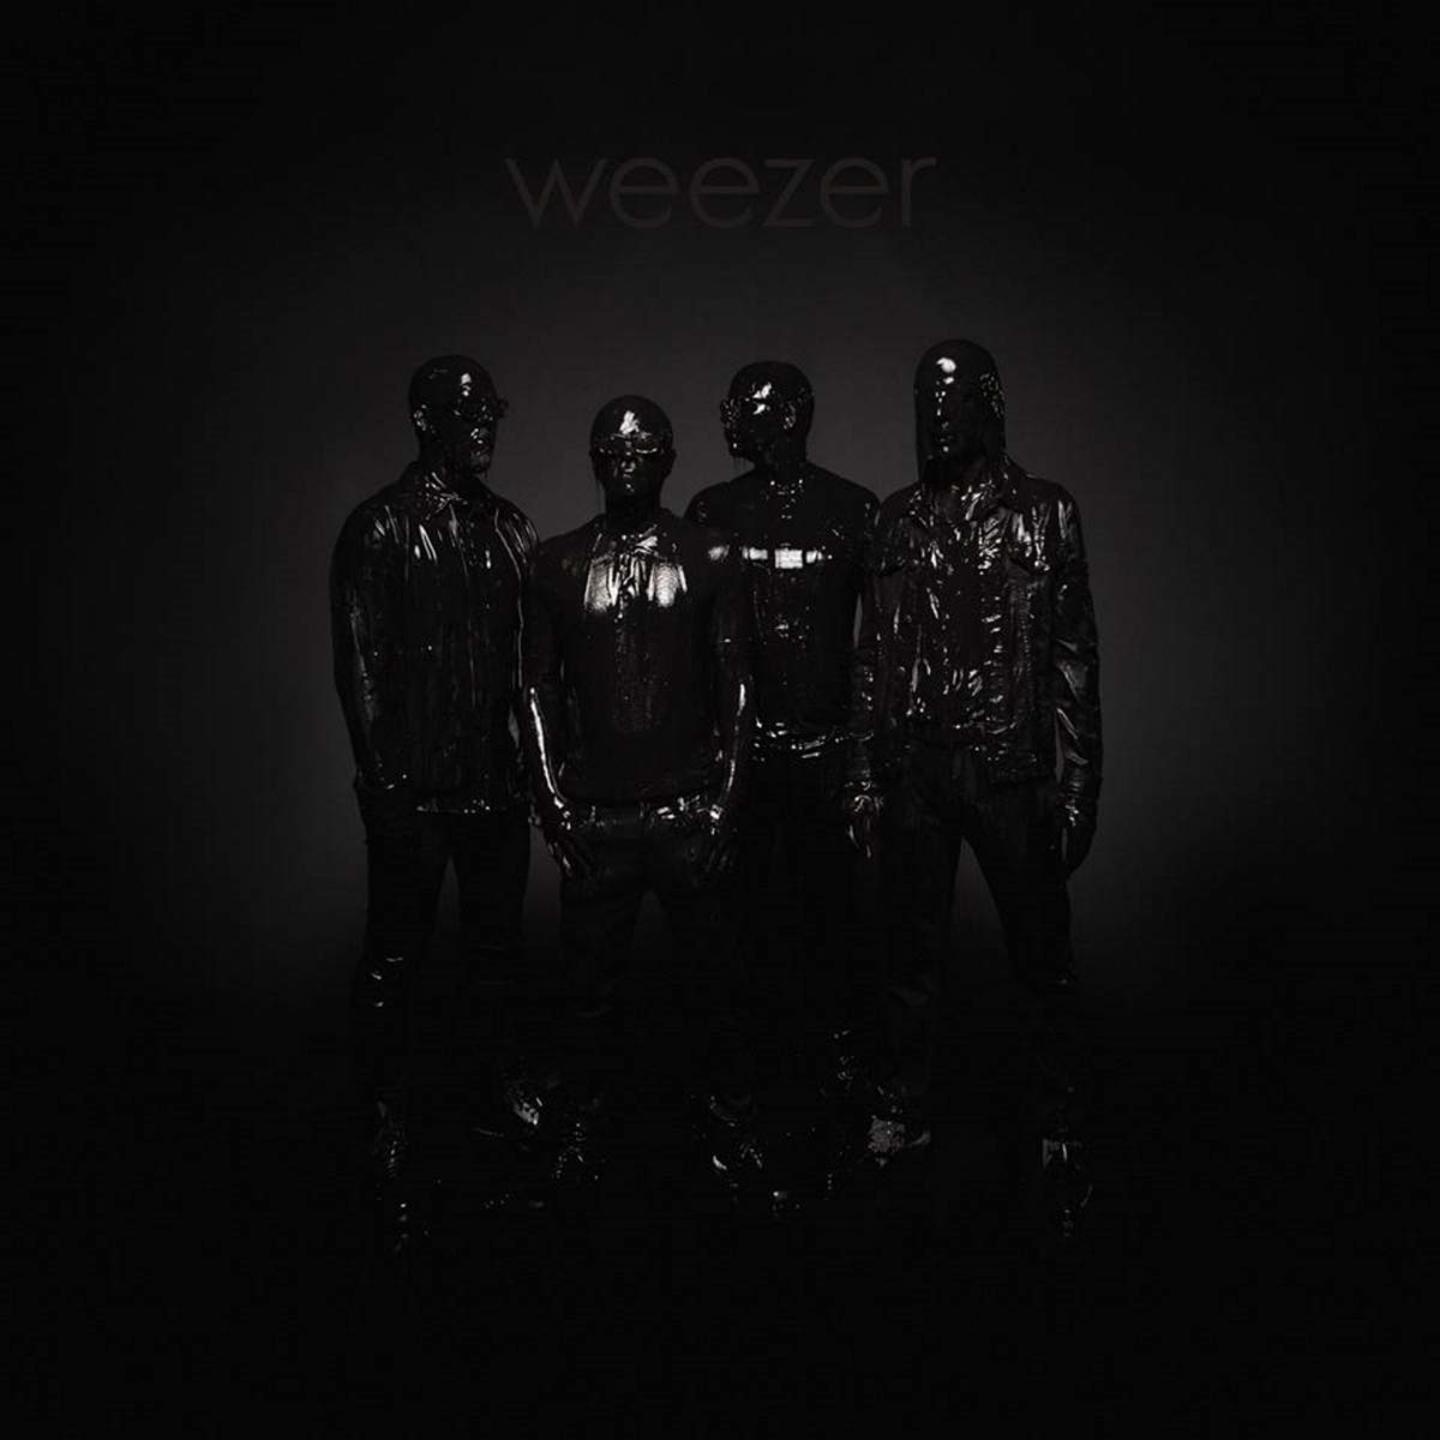 WEEZER - ST Black Album LP